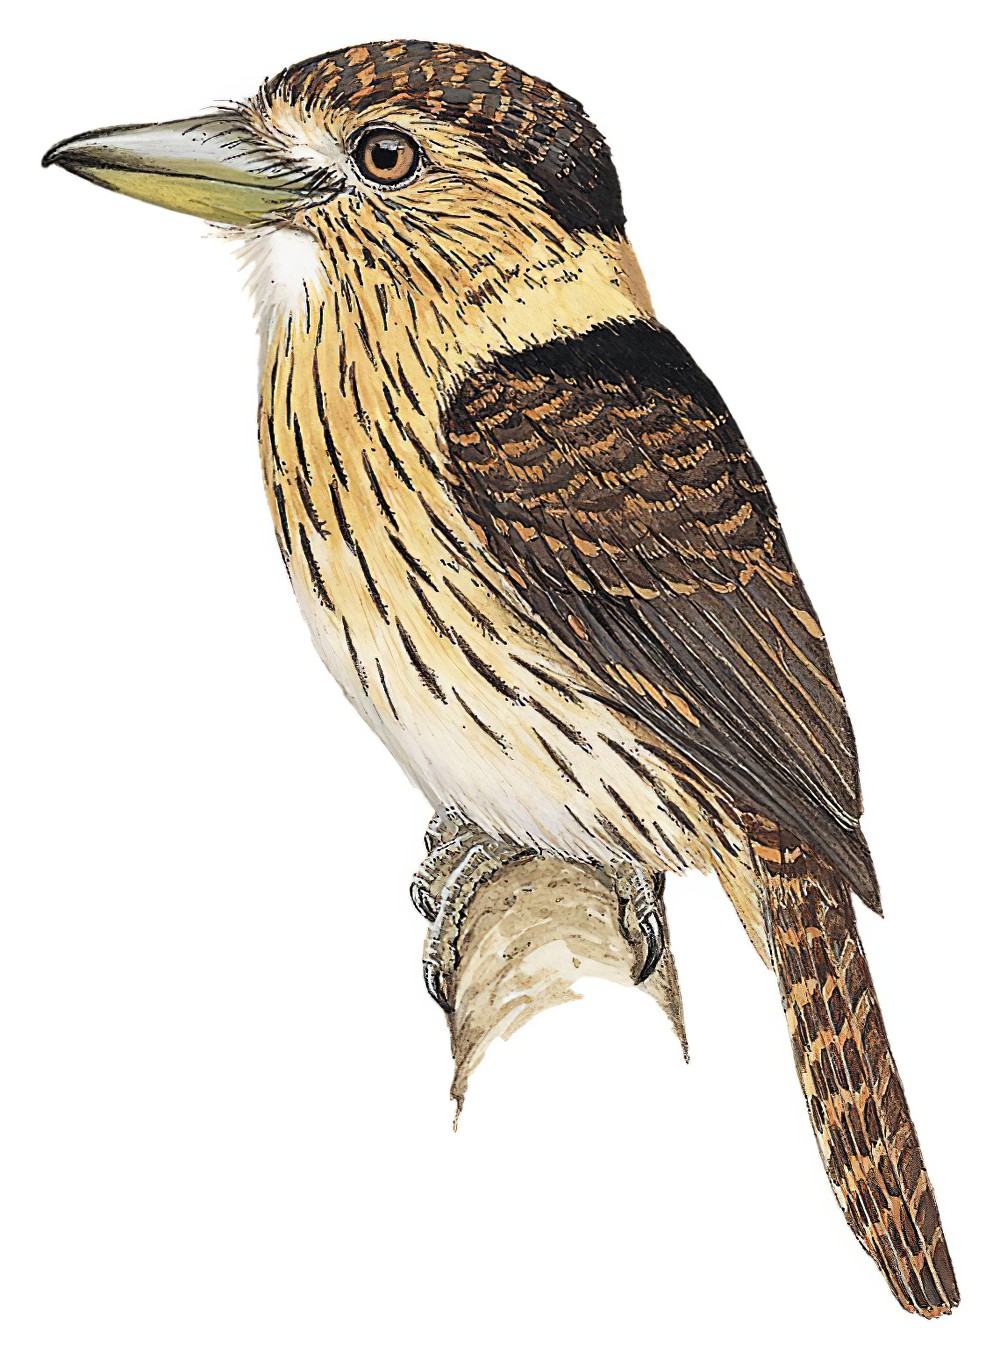 Eastern Striolated-Puffbird / Nystalus striolatus